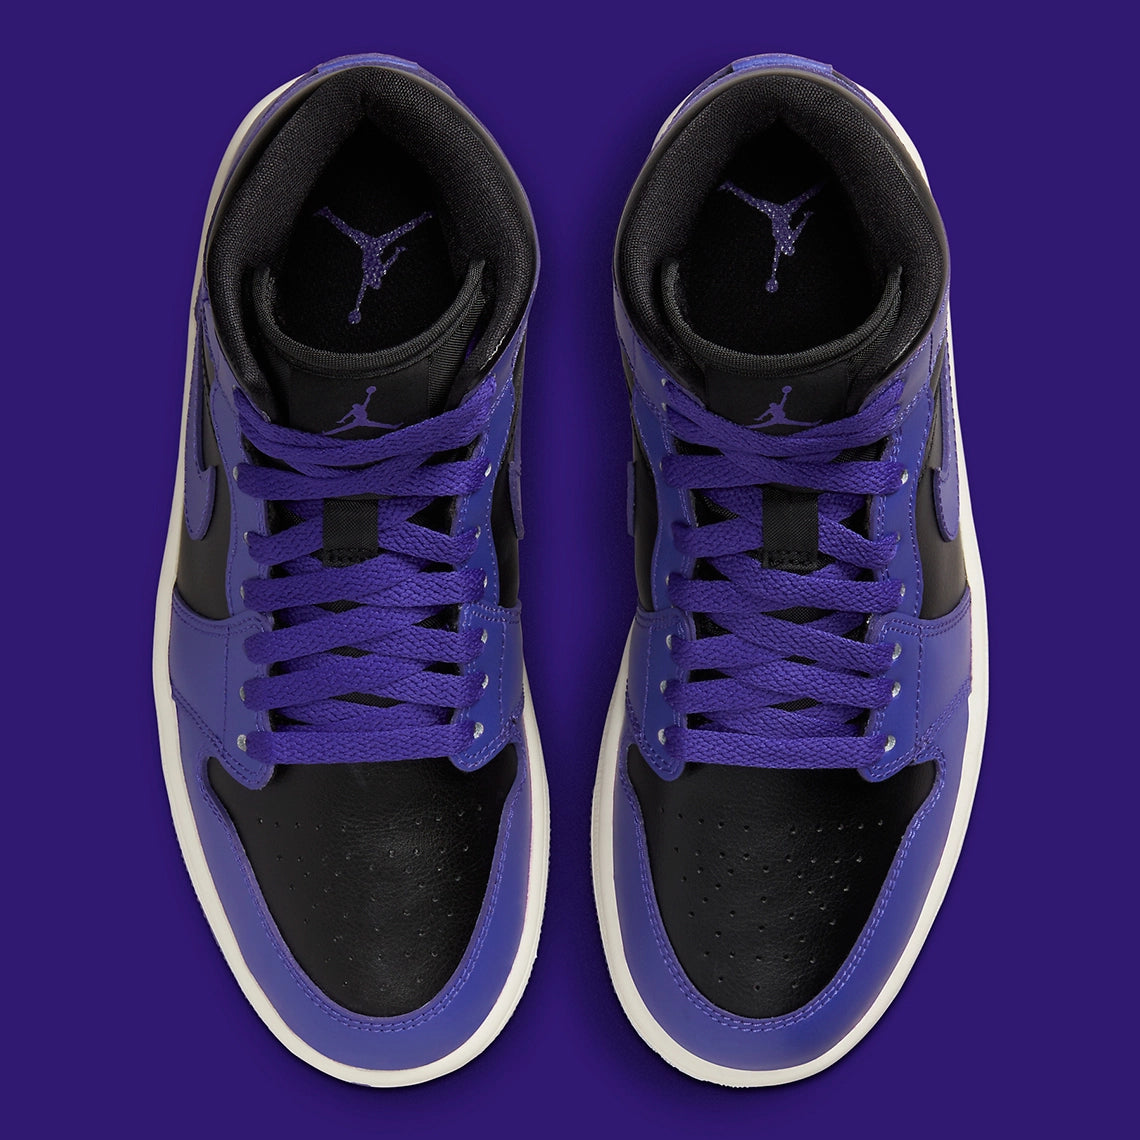 Jordan 1 Mid "Purple Black" (W)